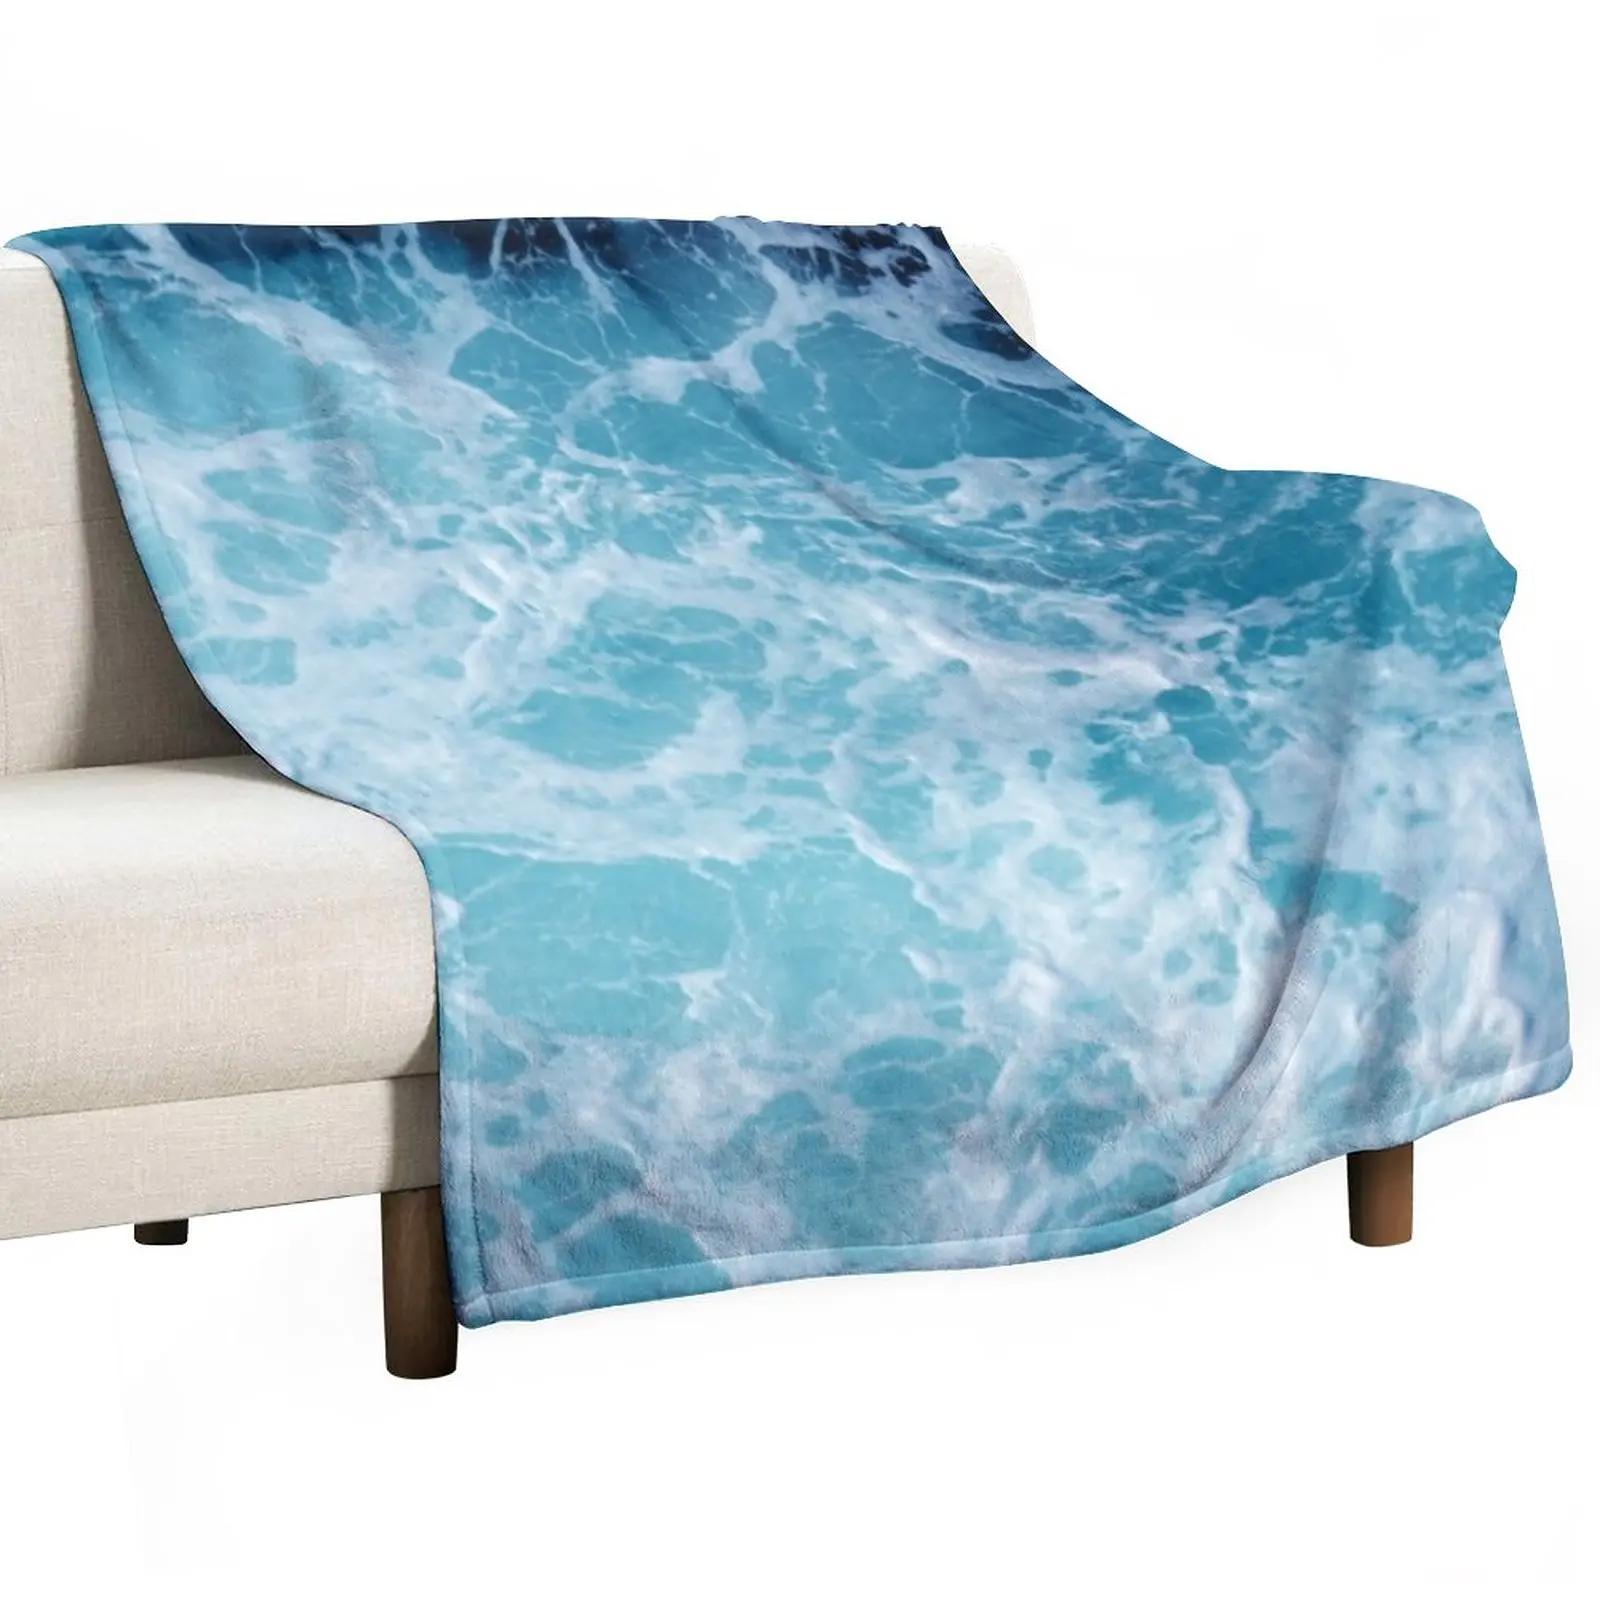 

New Blue Ocean Summer Beach Waves Throw Blanket sofa bed Bed linens Decorative Throw Blanket